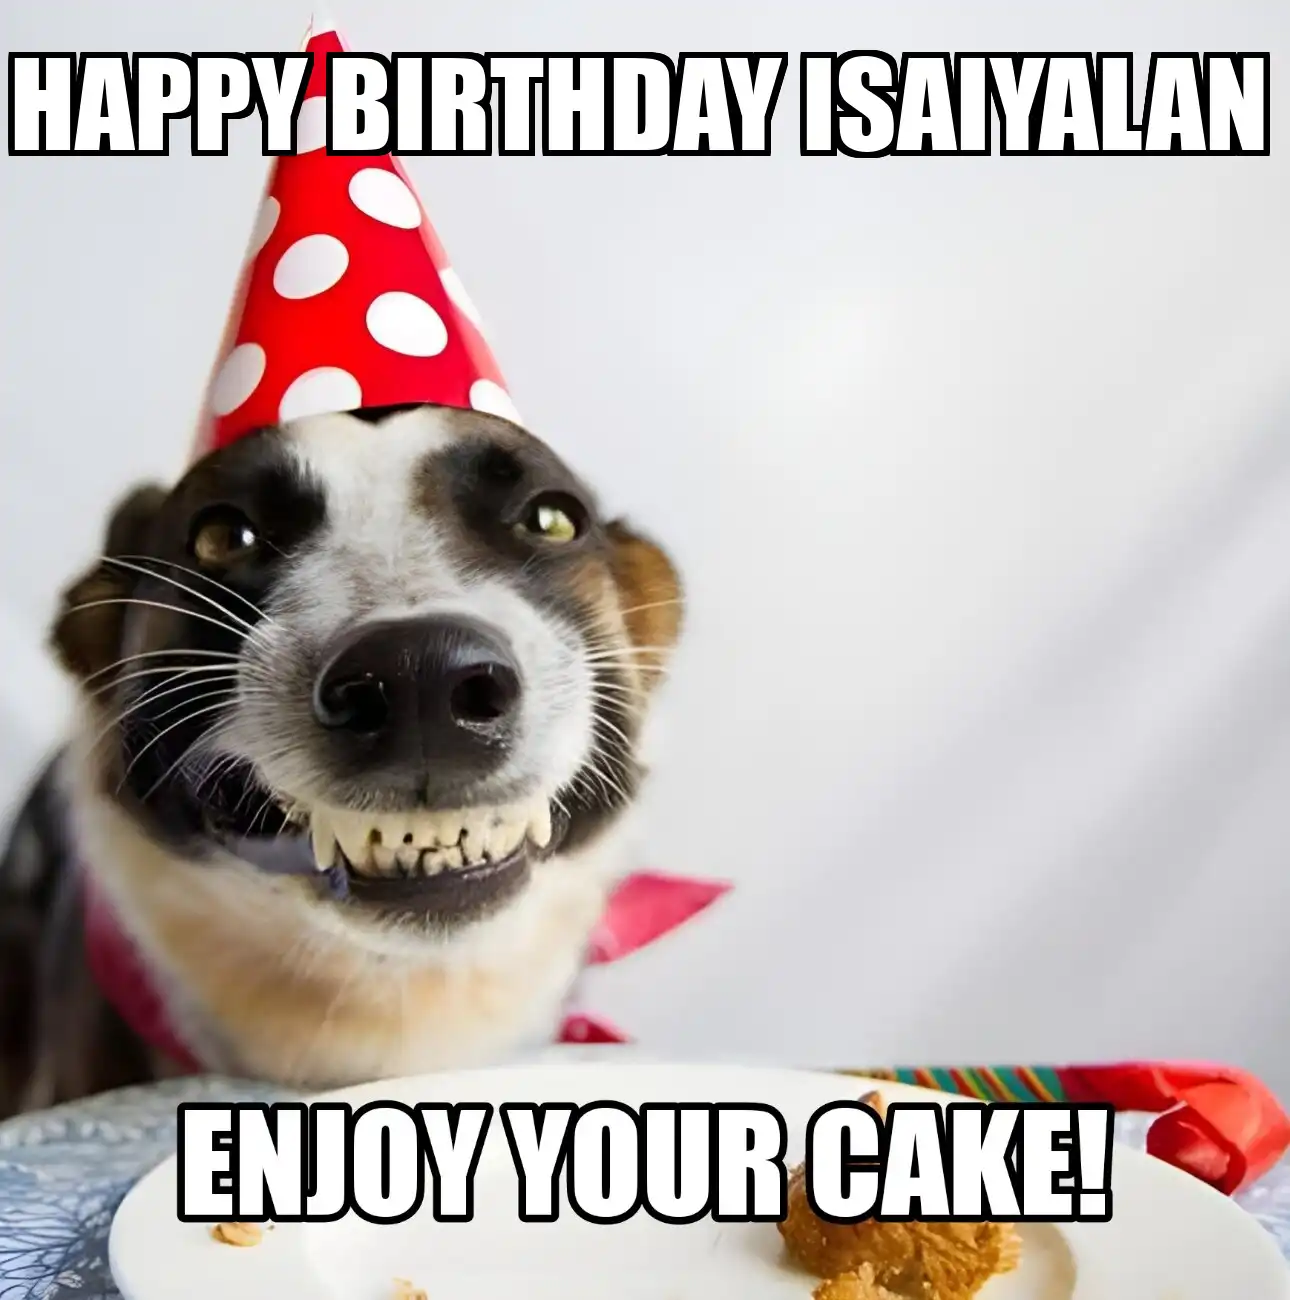 Happy Birthday Isaiyalan Enjoy Your Cake Dog Meme